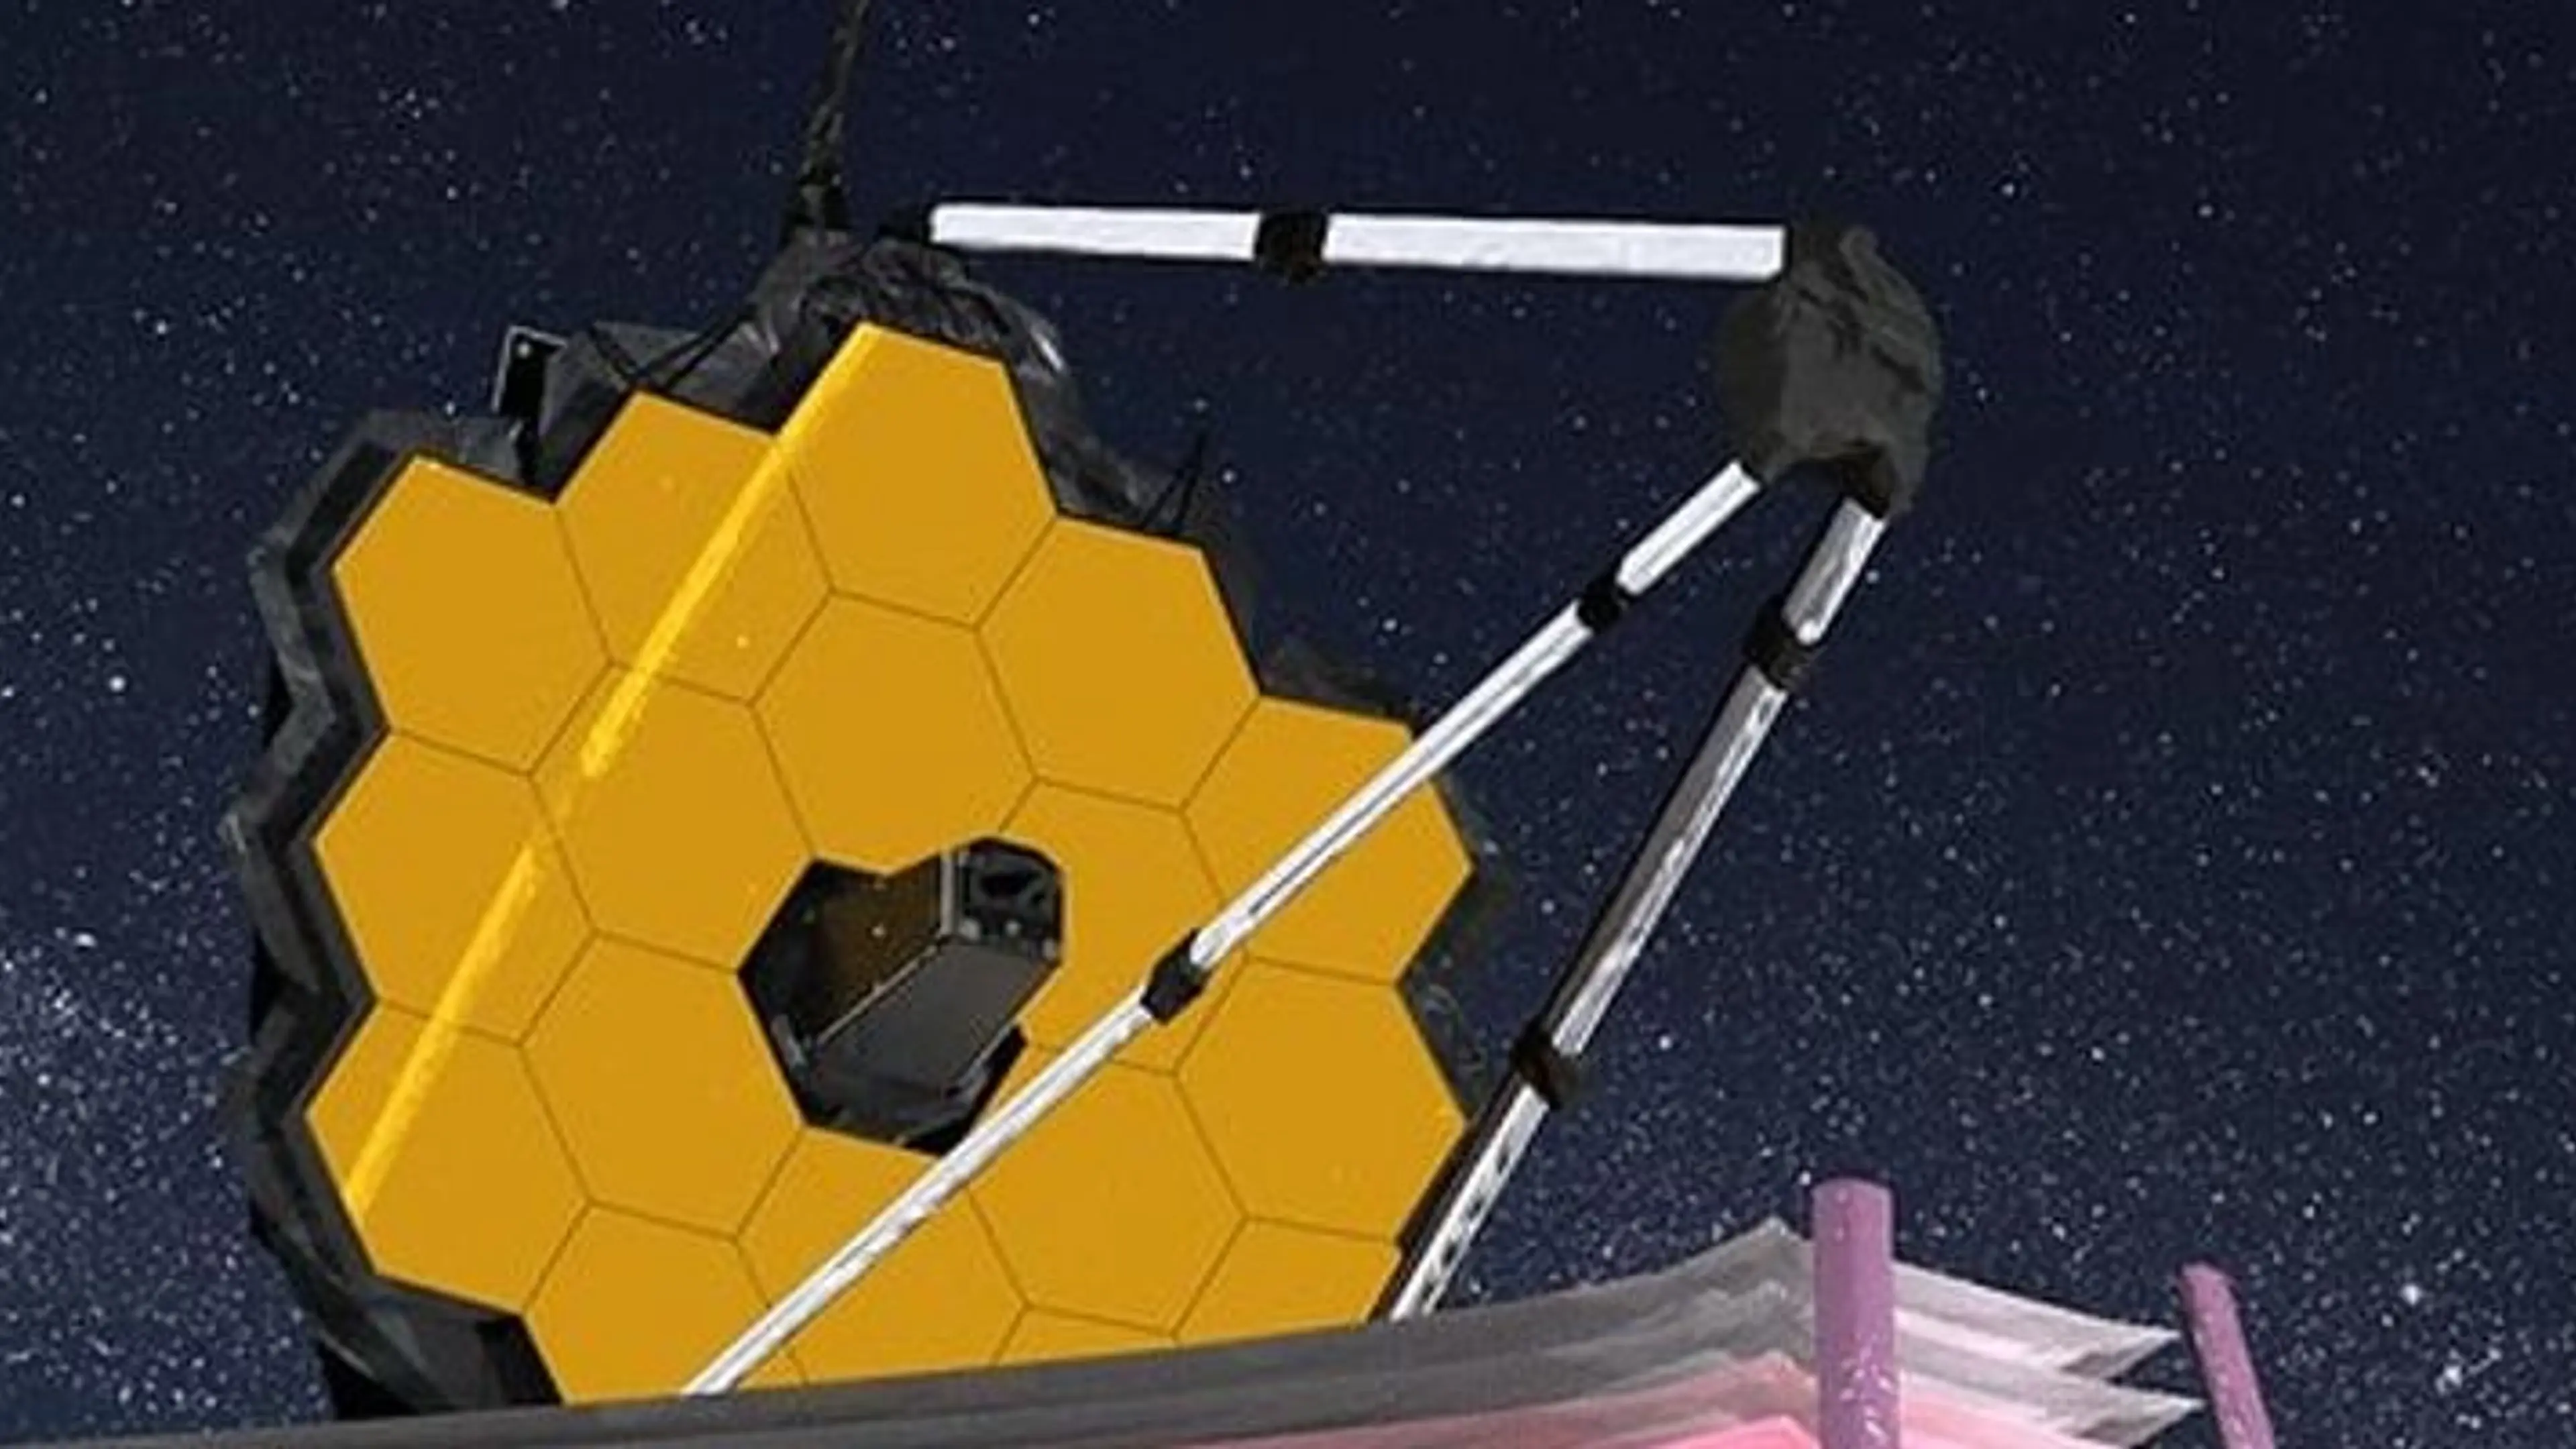 Record Broken! James Webb Space Telescope spots the most distant galaxy